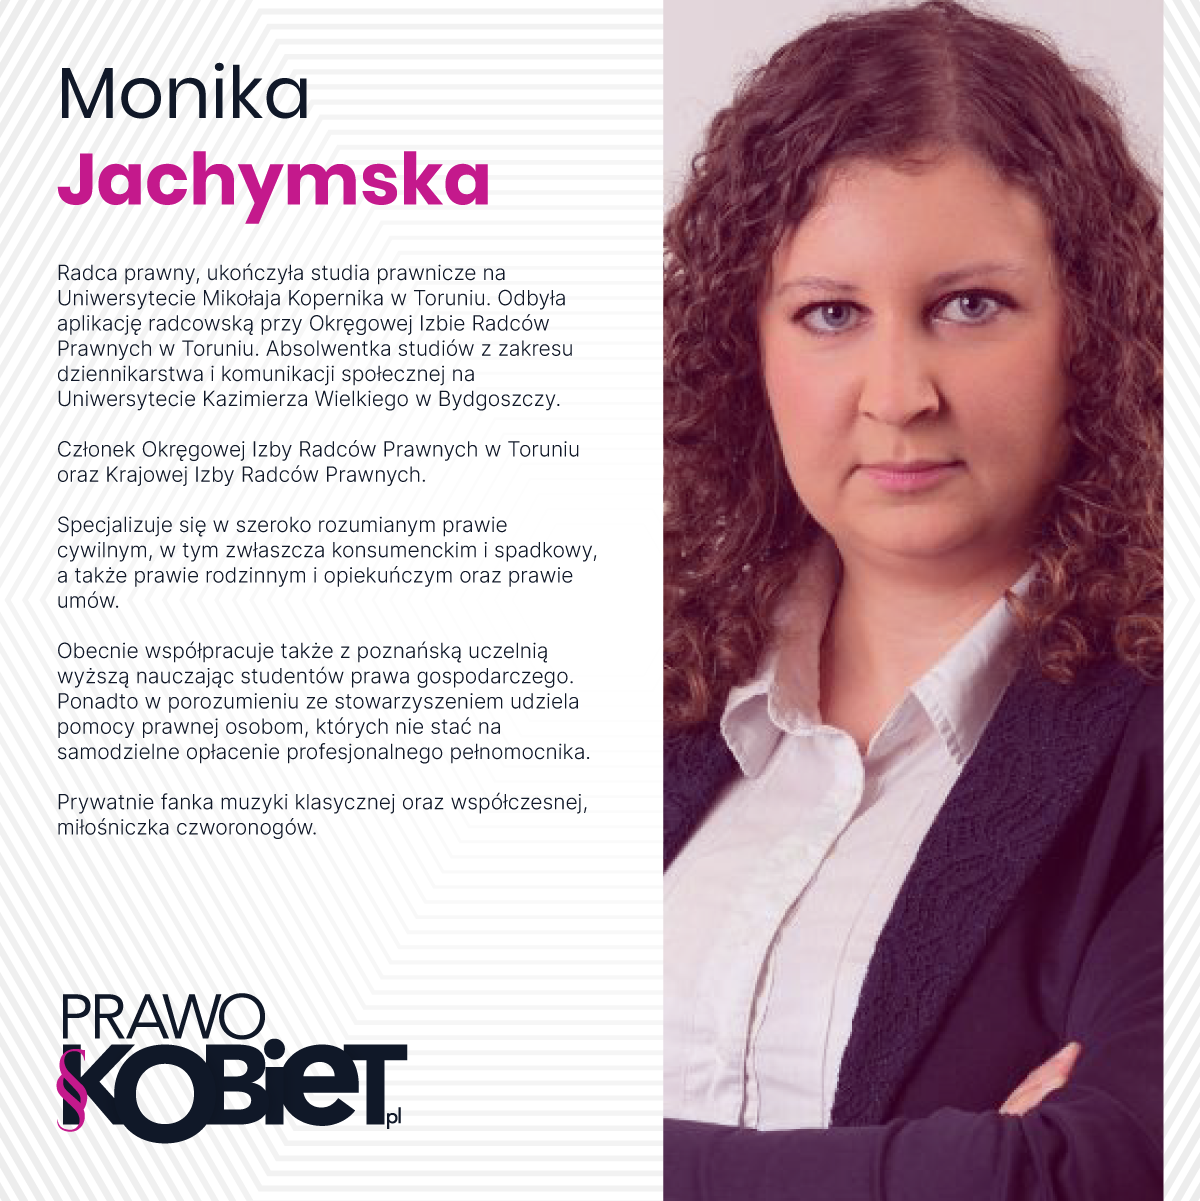 Monika Jachymska